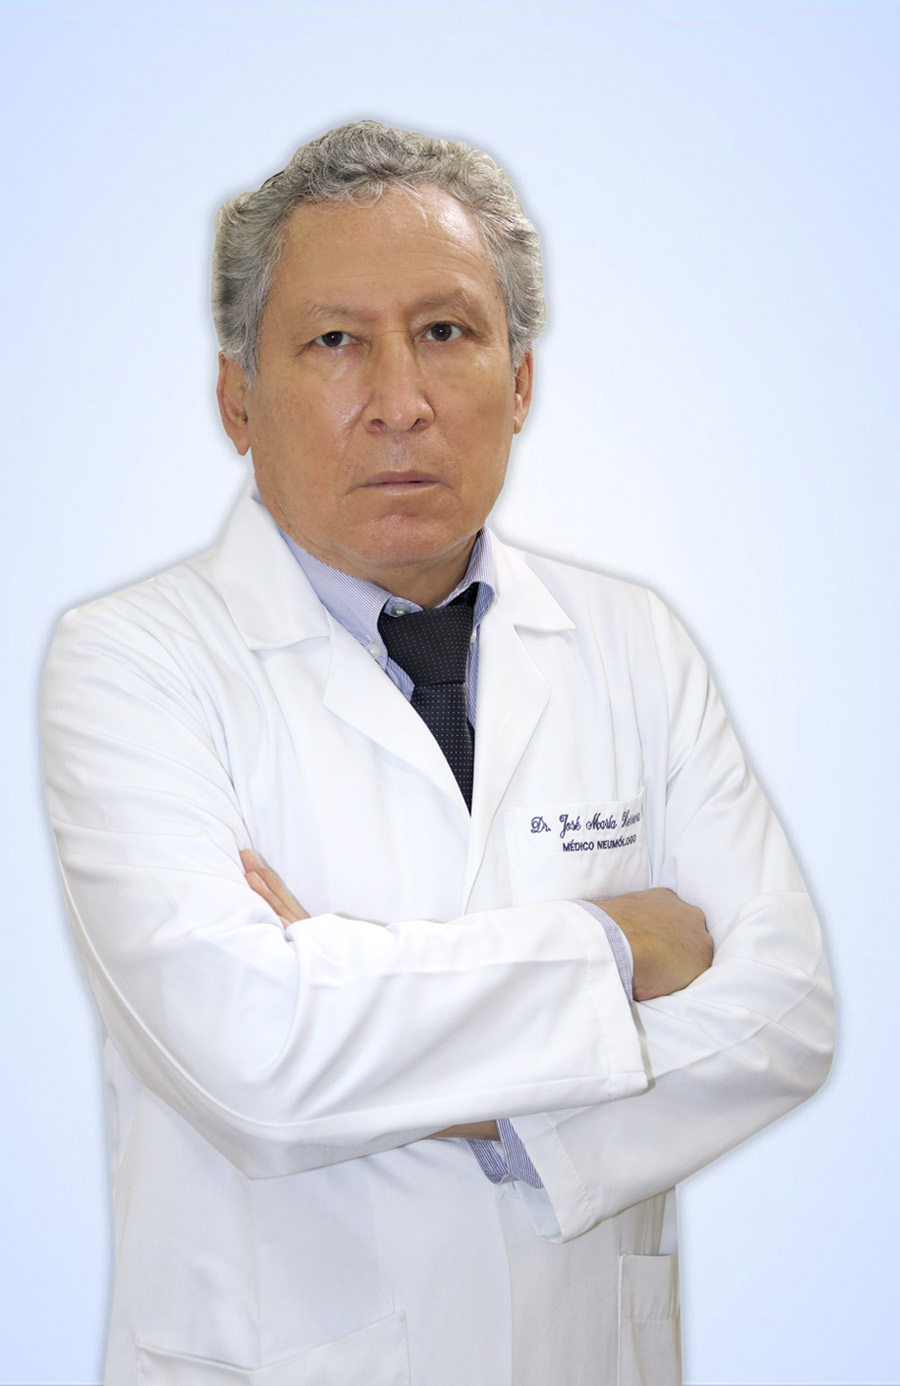 DR. HERRERA